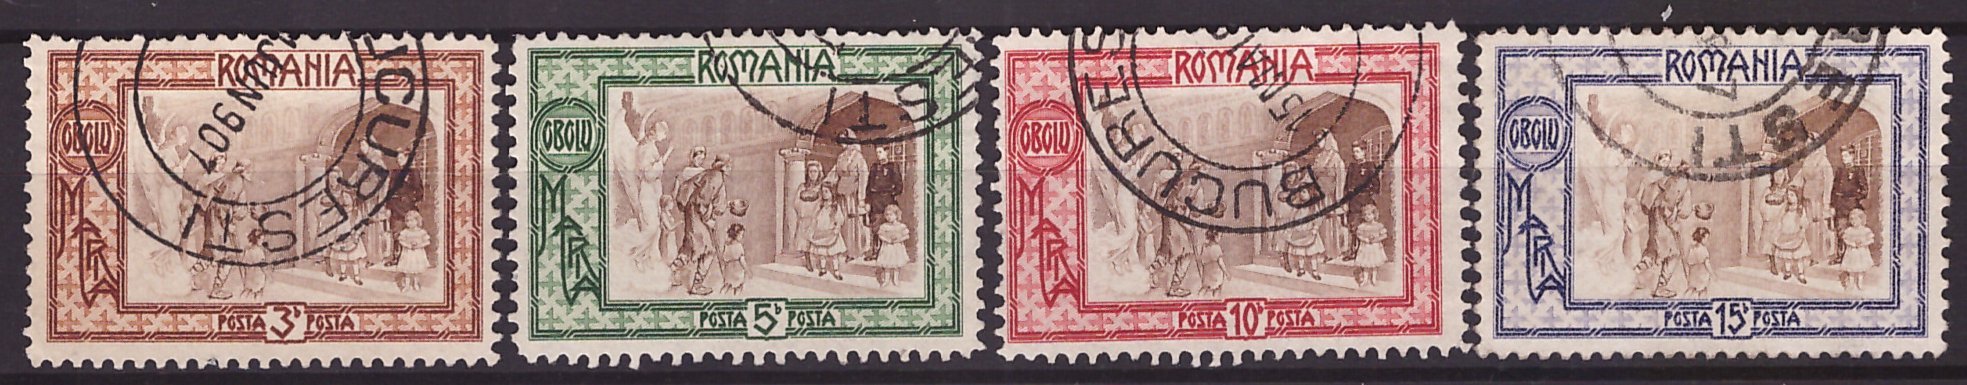 1907 - Obolu, serie uzata